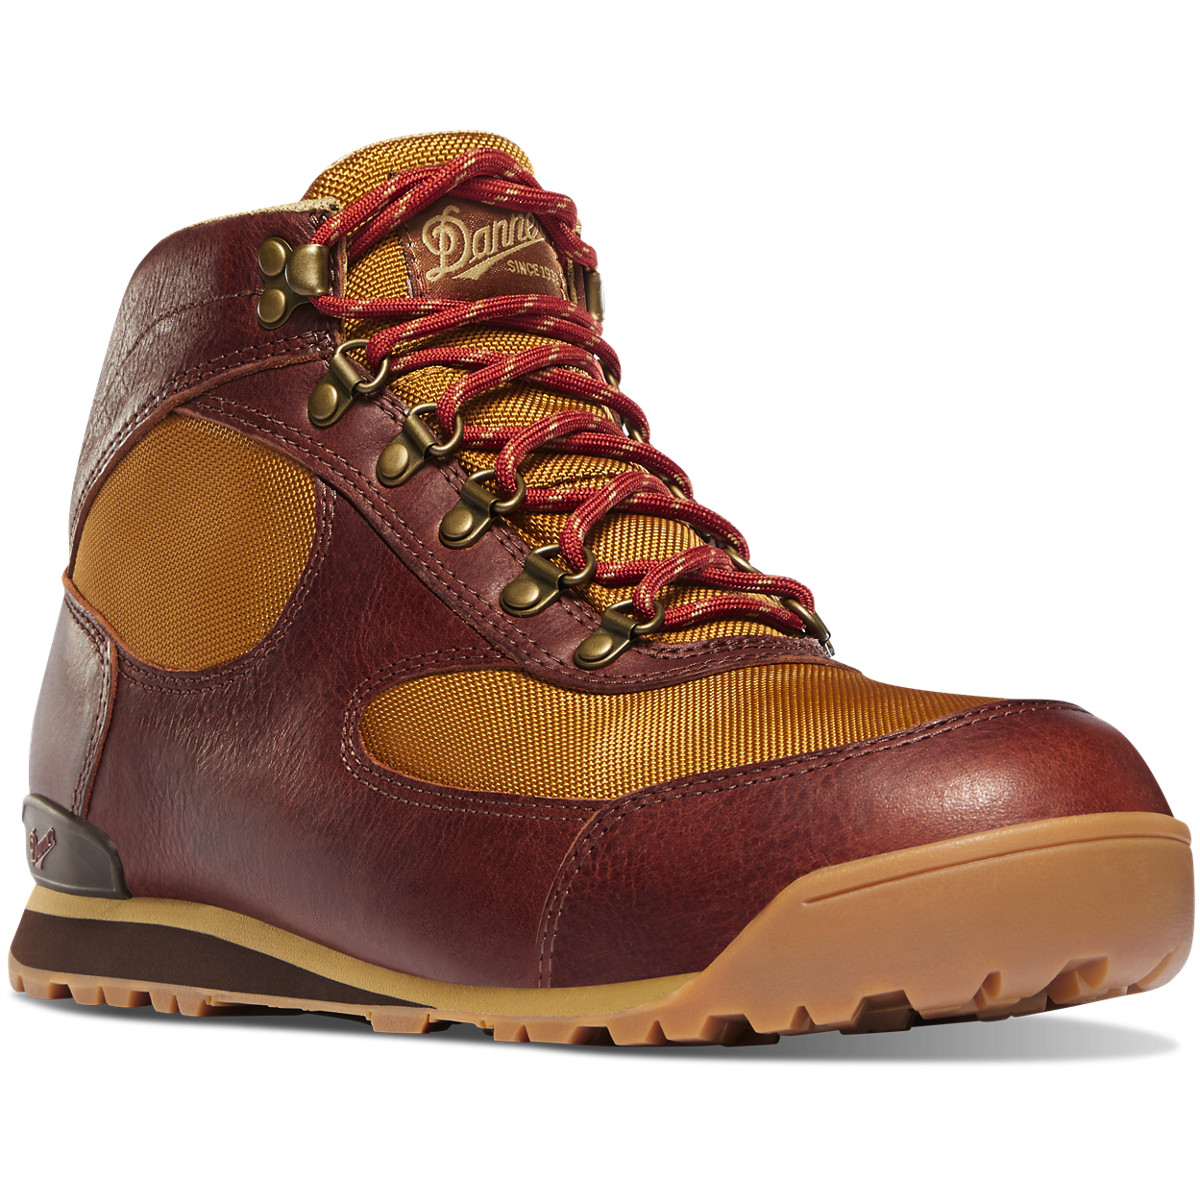 Danner Mens Jag Hiking Boots Brown - BQP684359